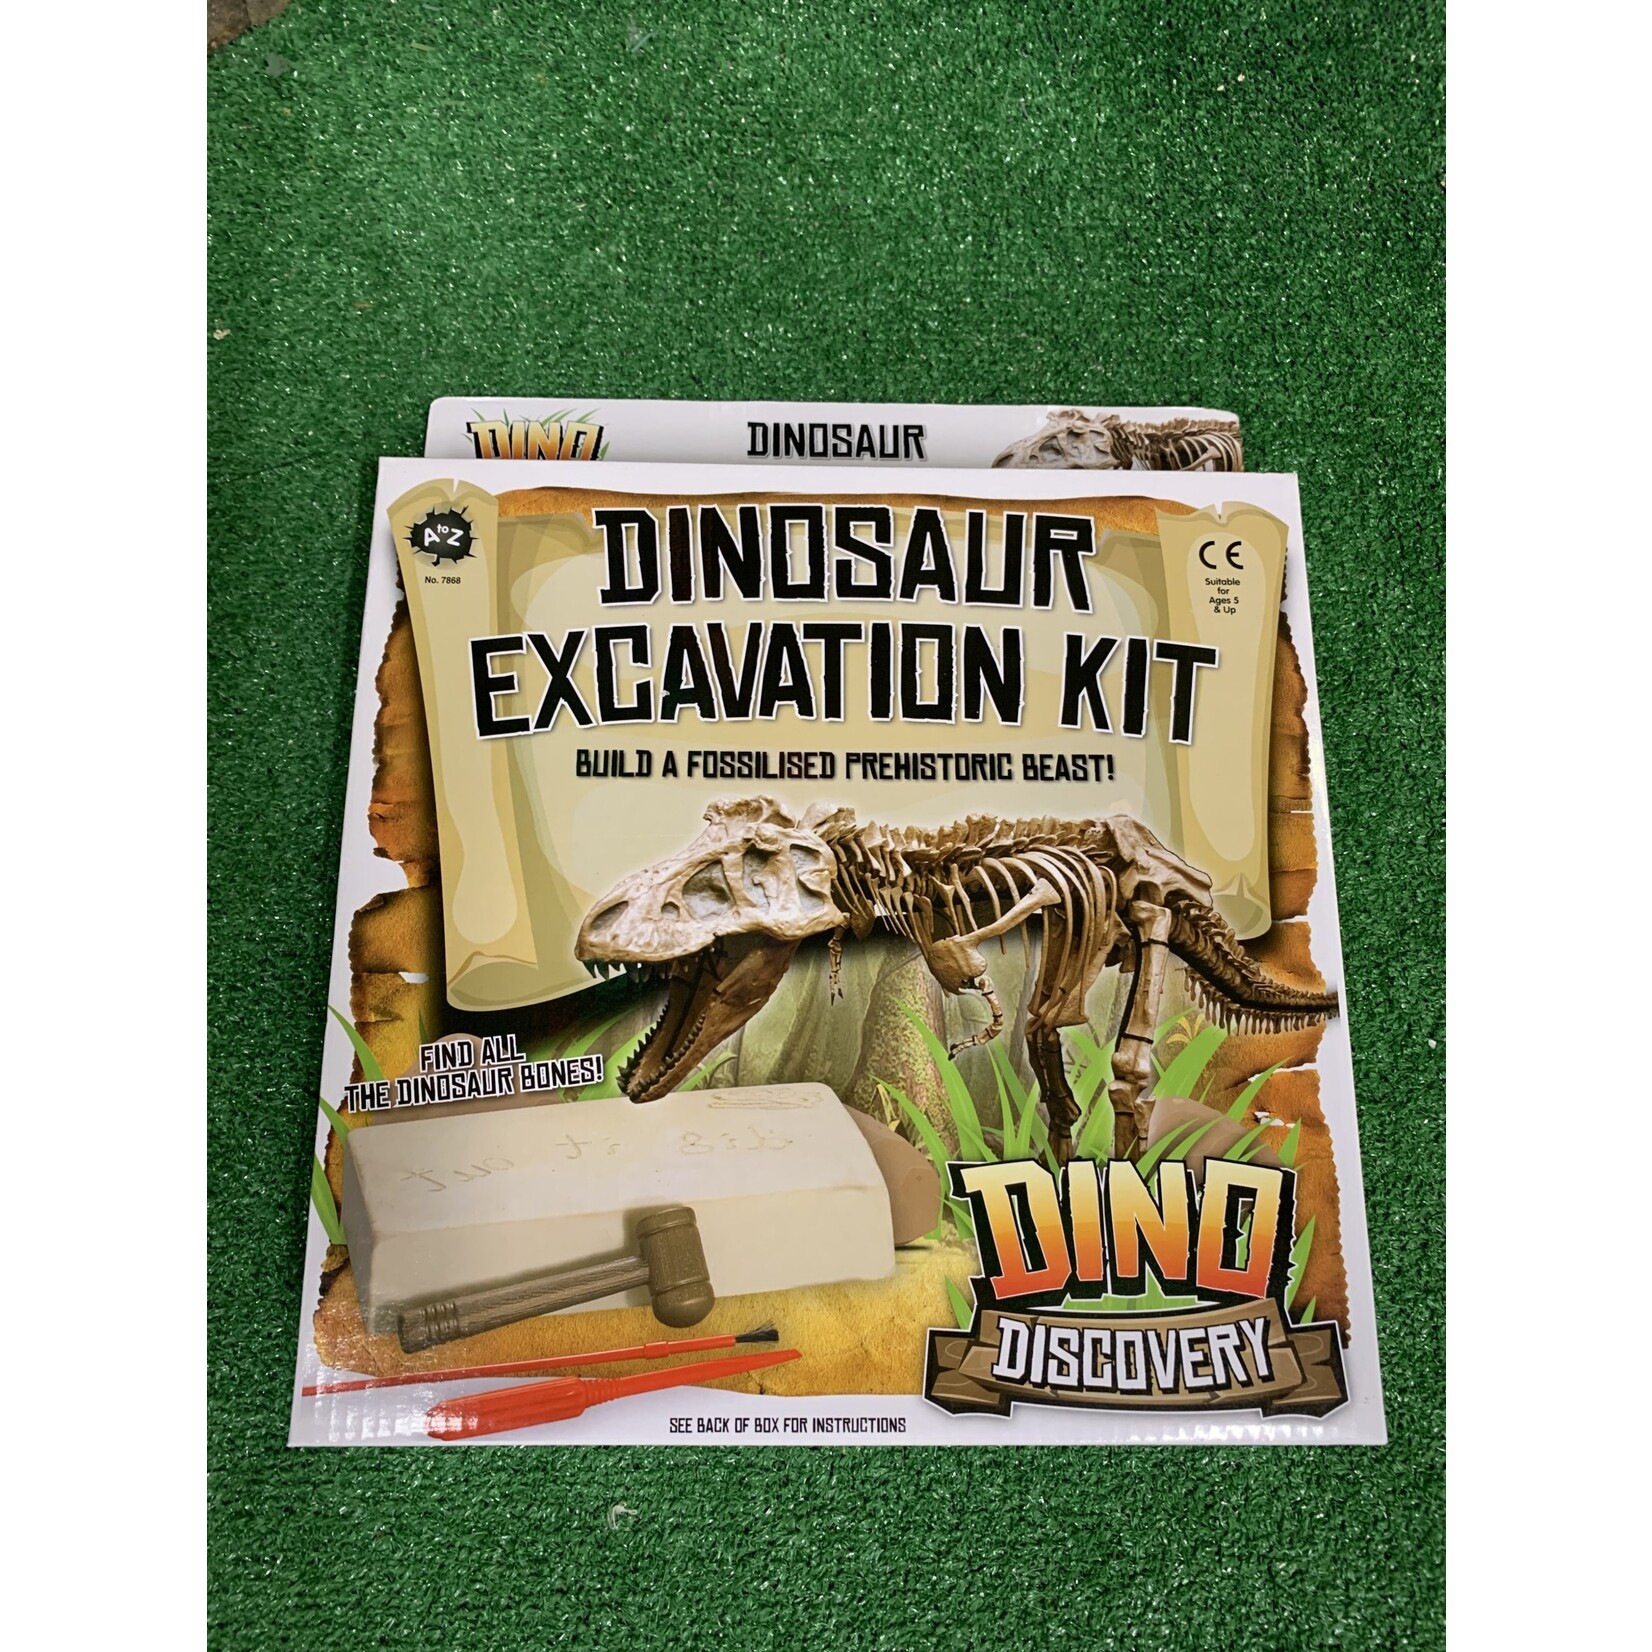 AtoZ Dinosaur Excavation Kit